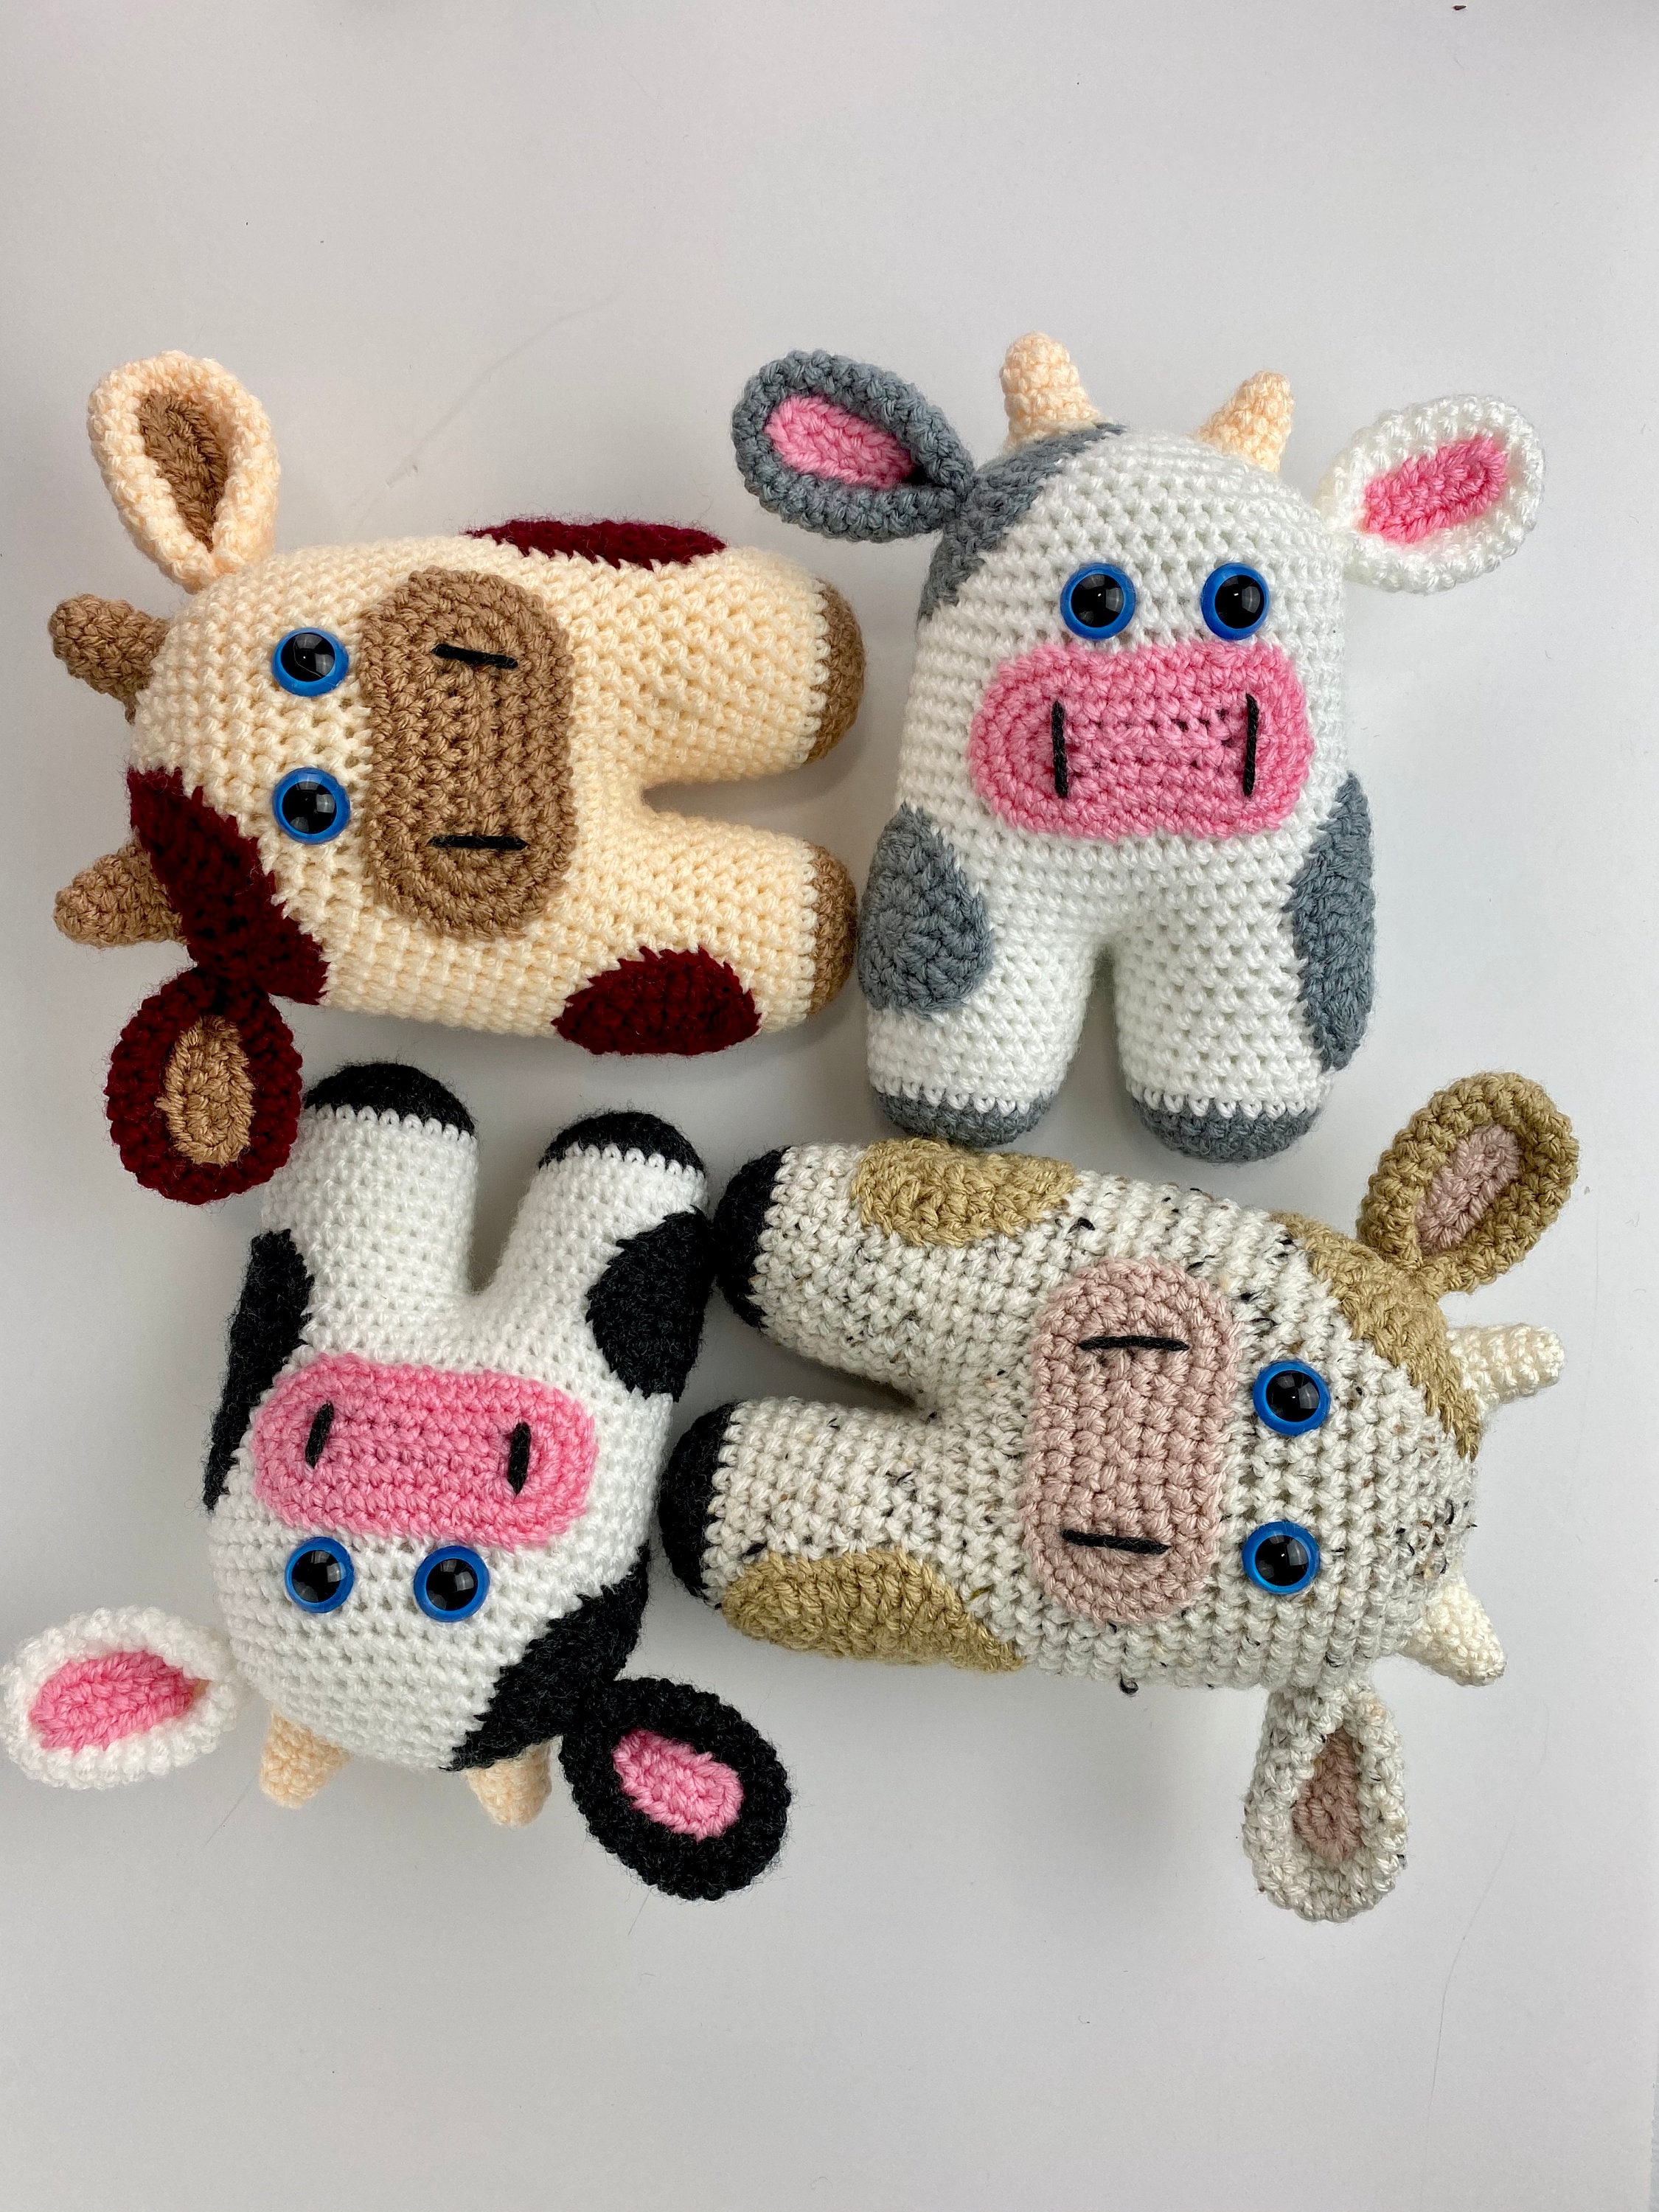 amigurumi-crochet-patterns-for-beginners-amelia-s-crochet